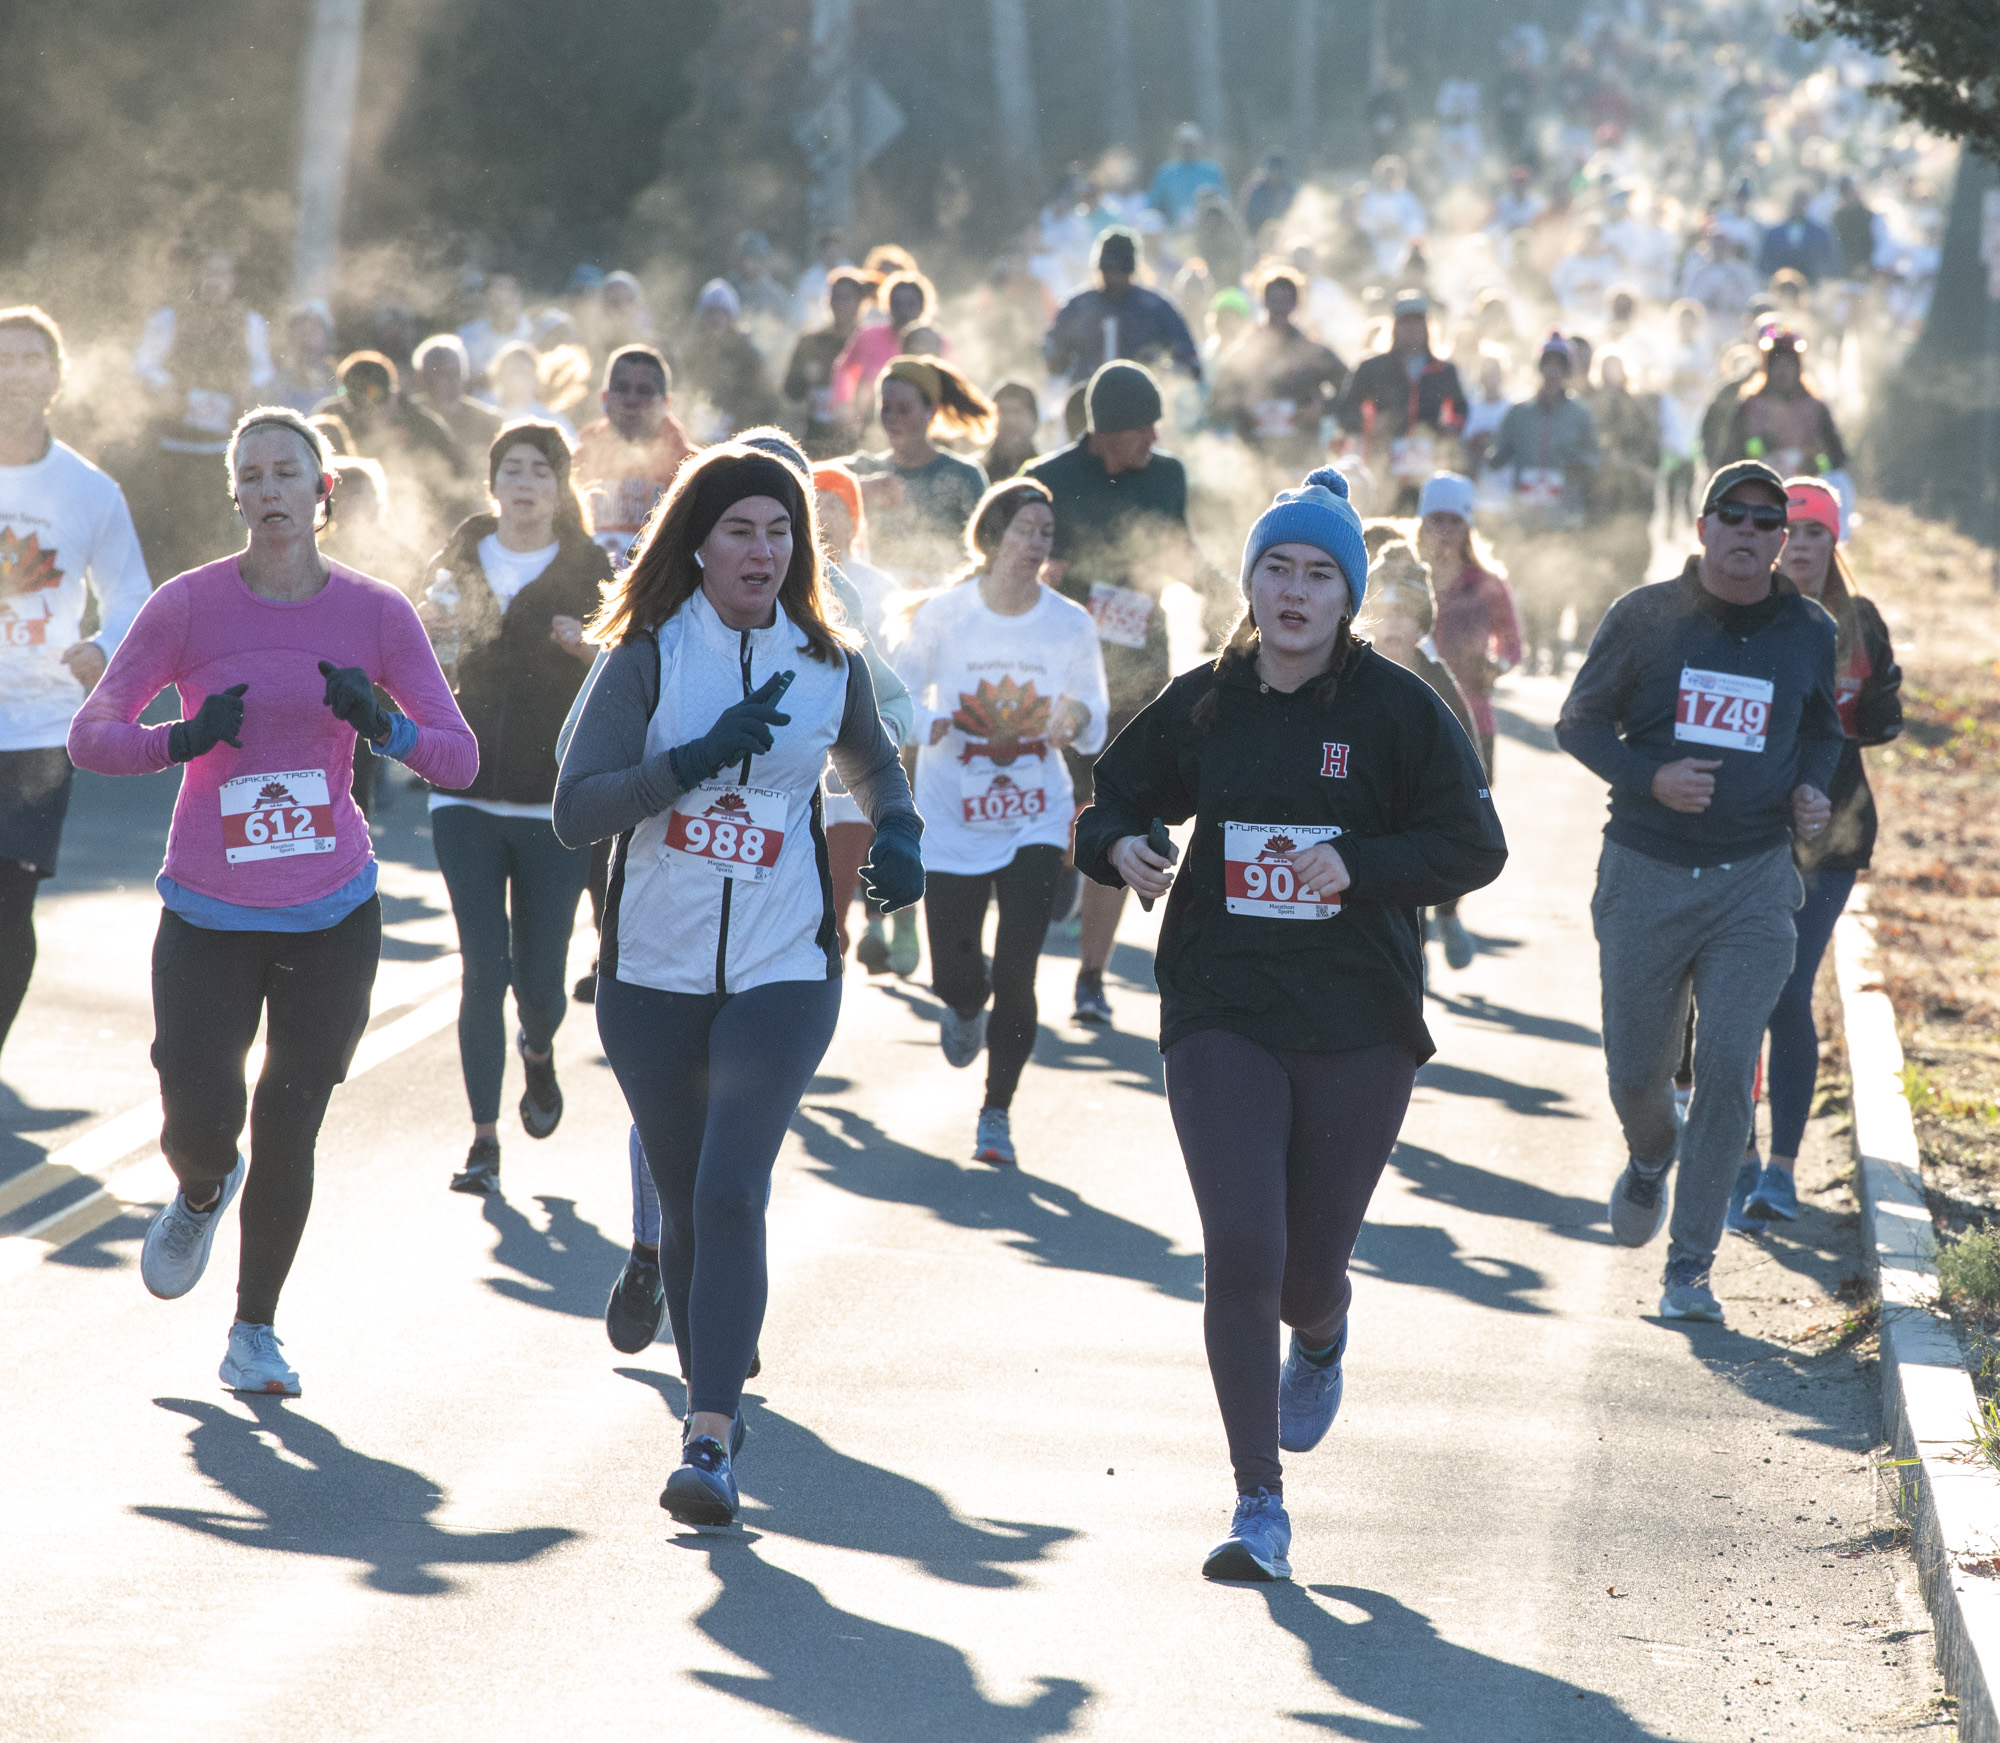 1,500 runners join the race at Hingham’s annual Turkey Trot Bill Brett